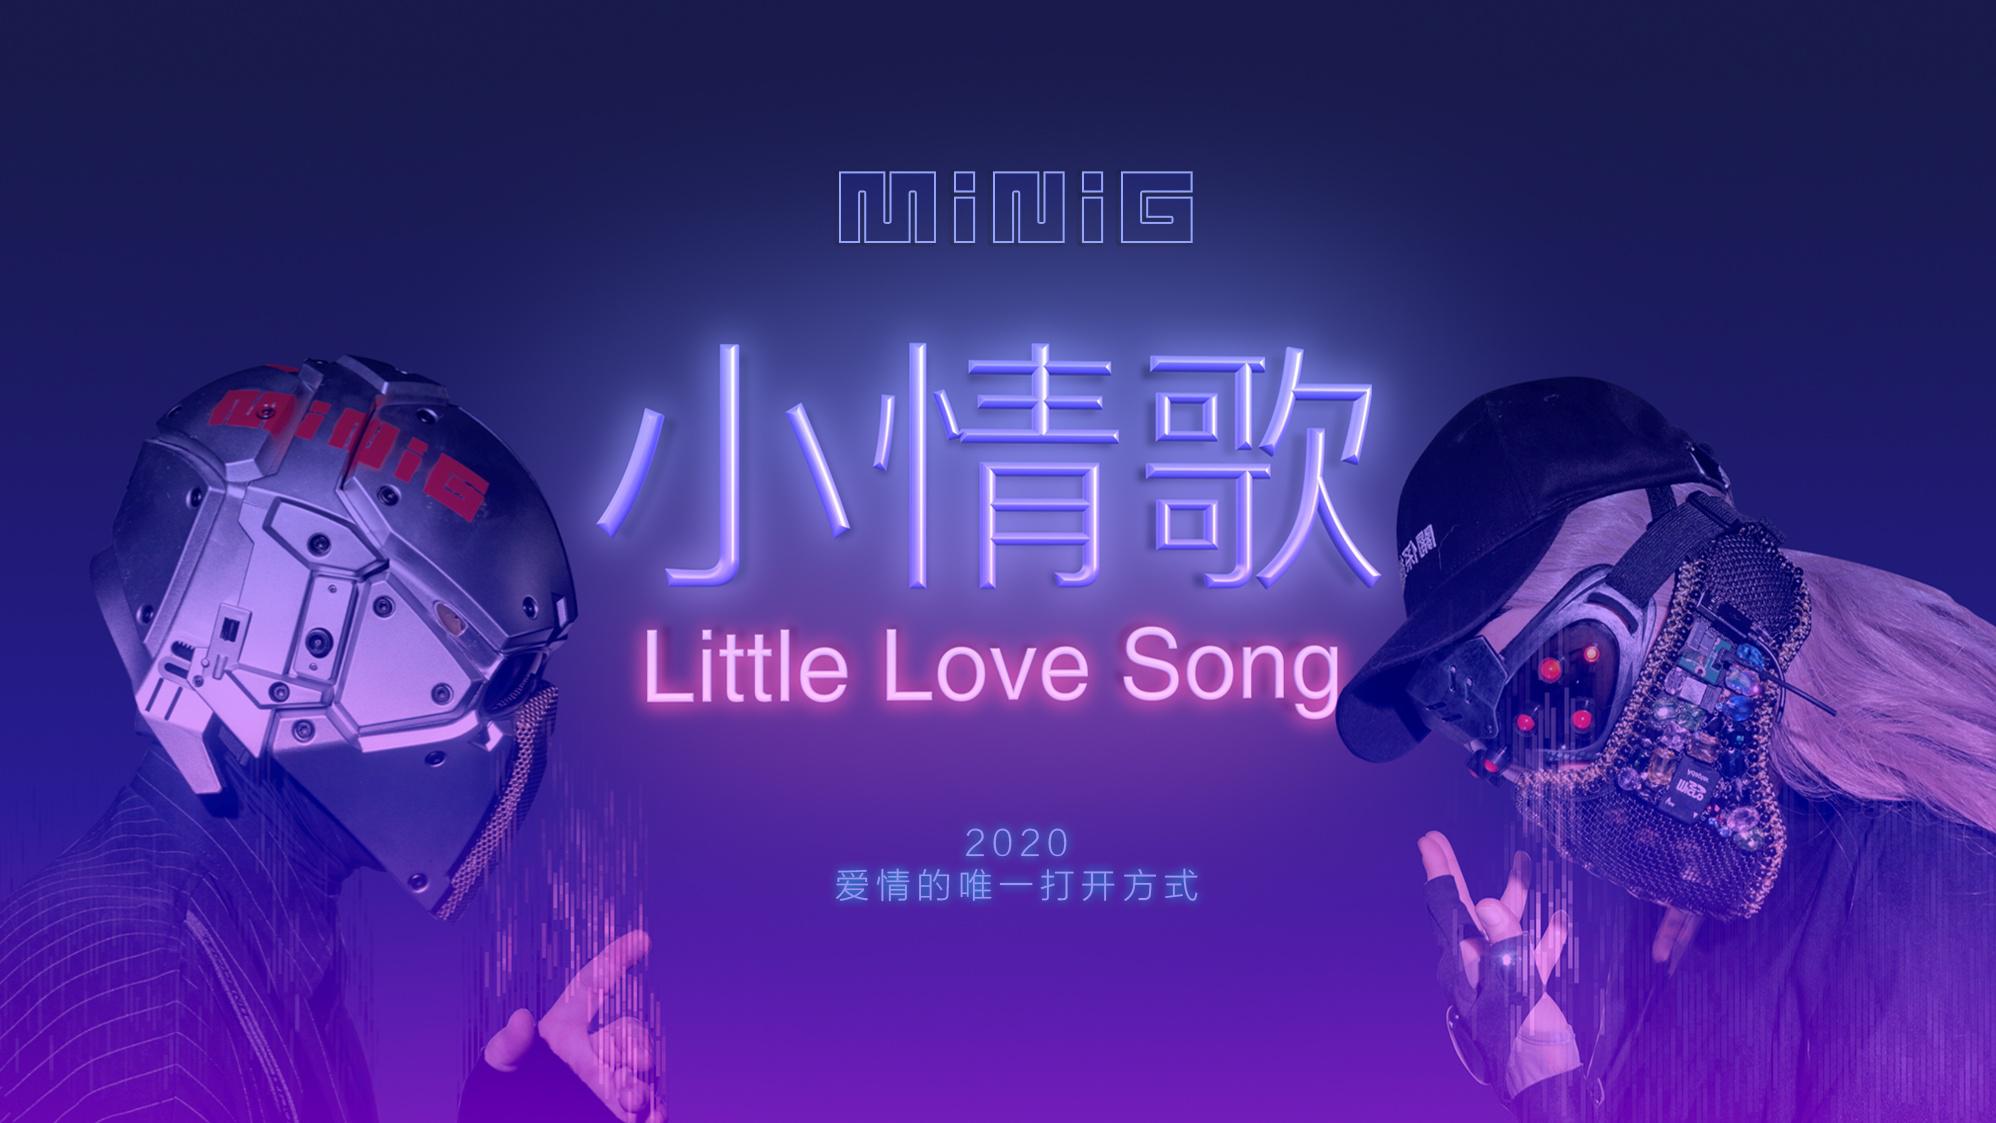 MiniG迷你机 - 小情歌 (Little Love Song)